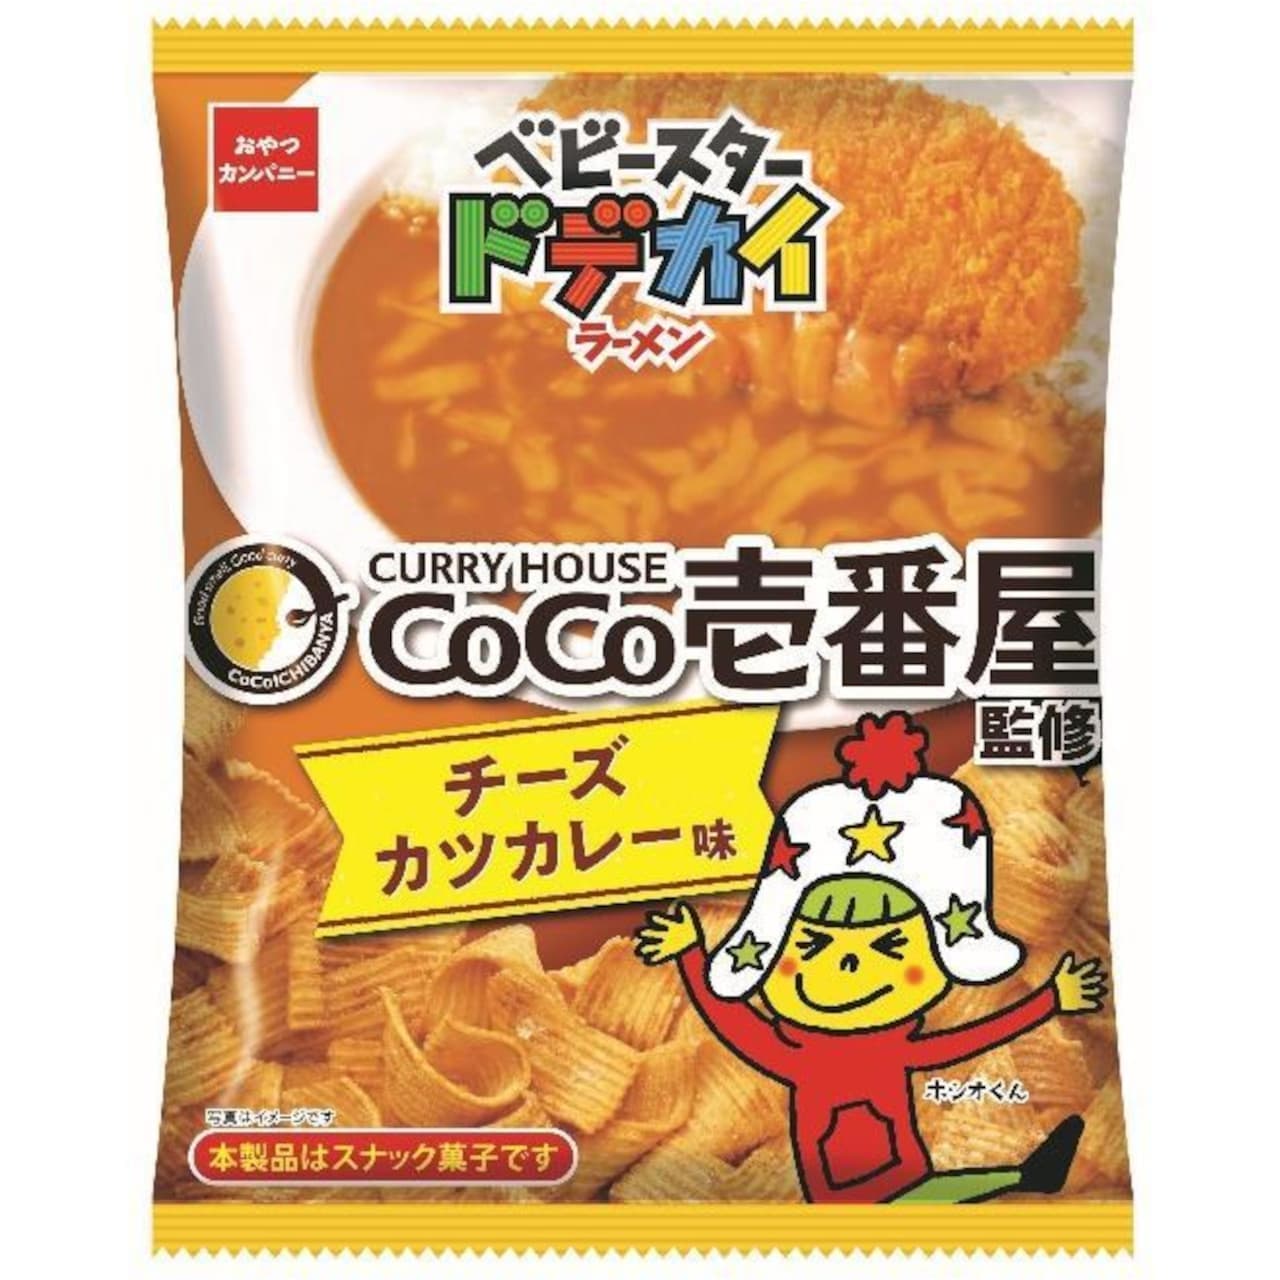 Coco Ichibanya "CoCo Ichibanya supervised Baby Star Dodekai Ramen with Cheese Cutlet Curry Flavor".